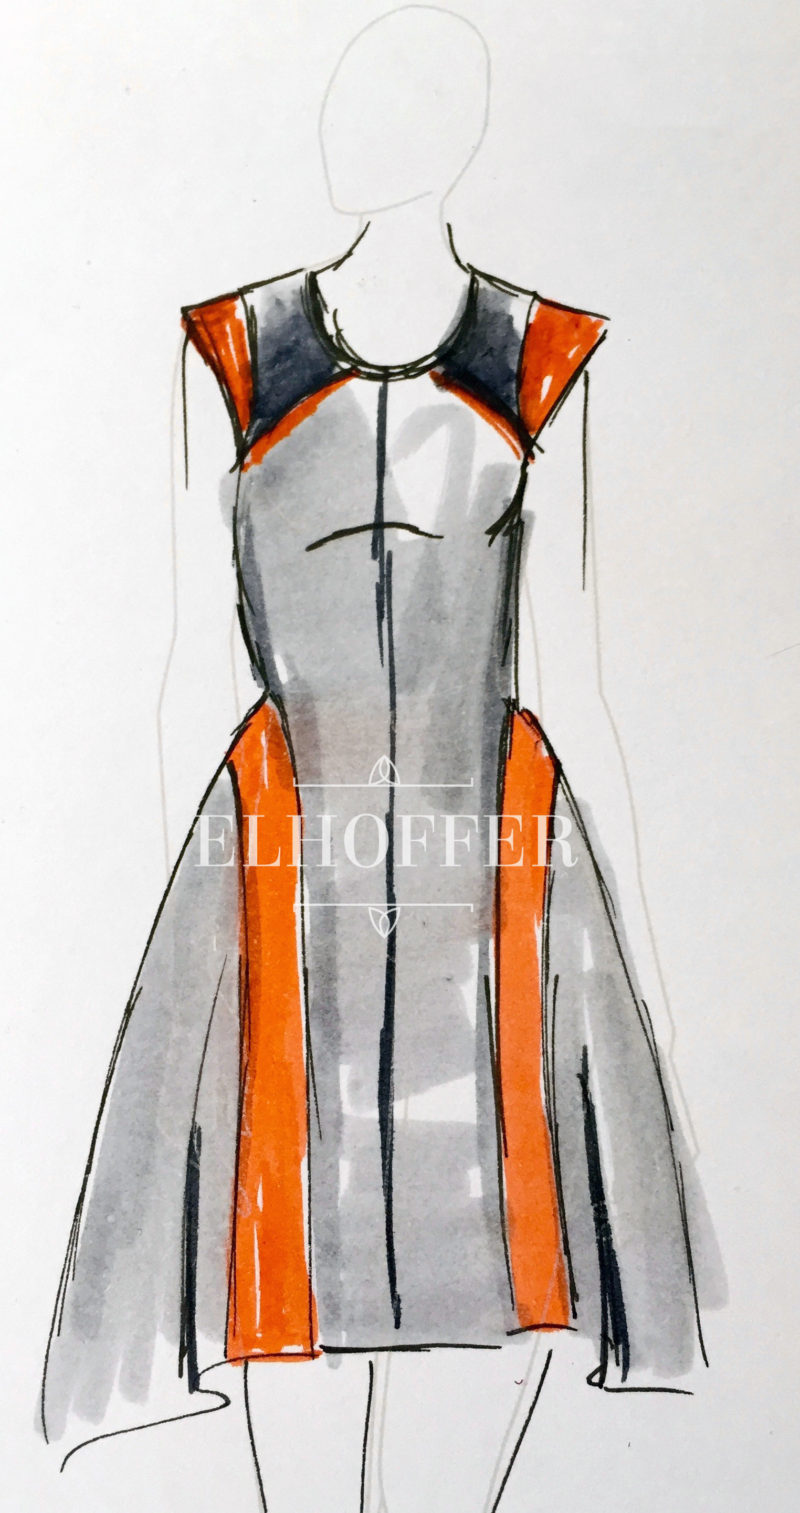 Elhoffer Design - BB-8 inspired dress concept sketch